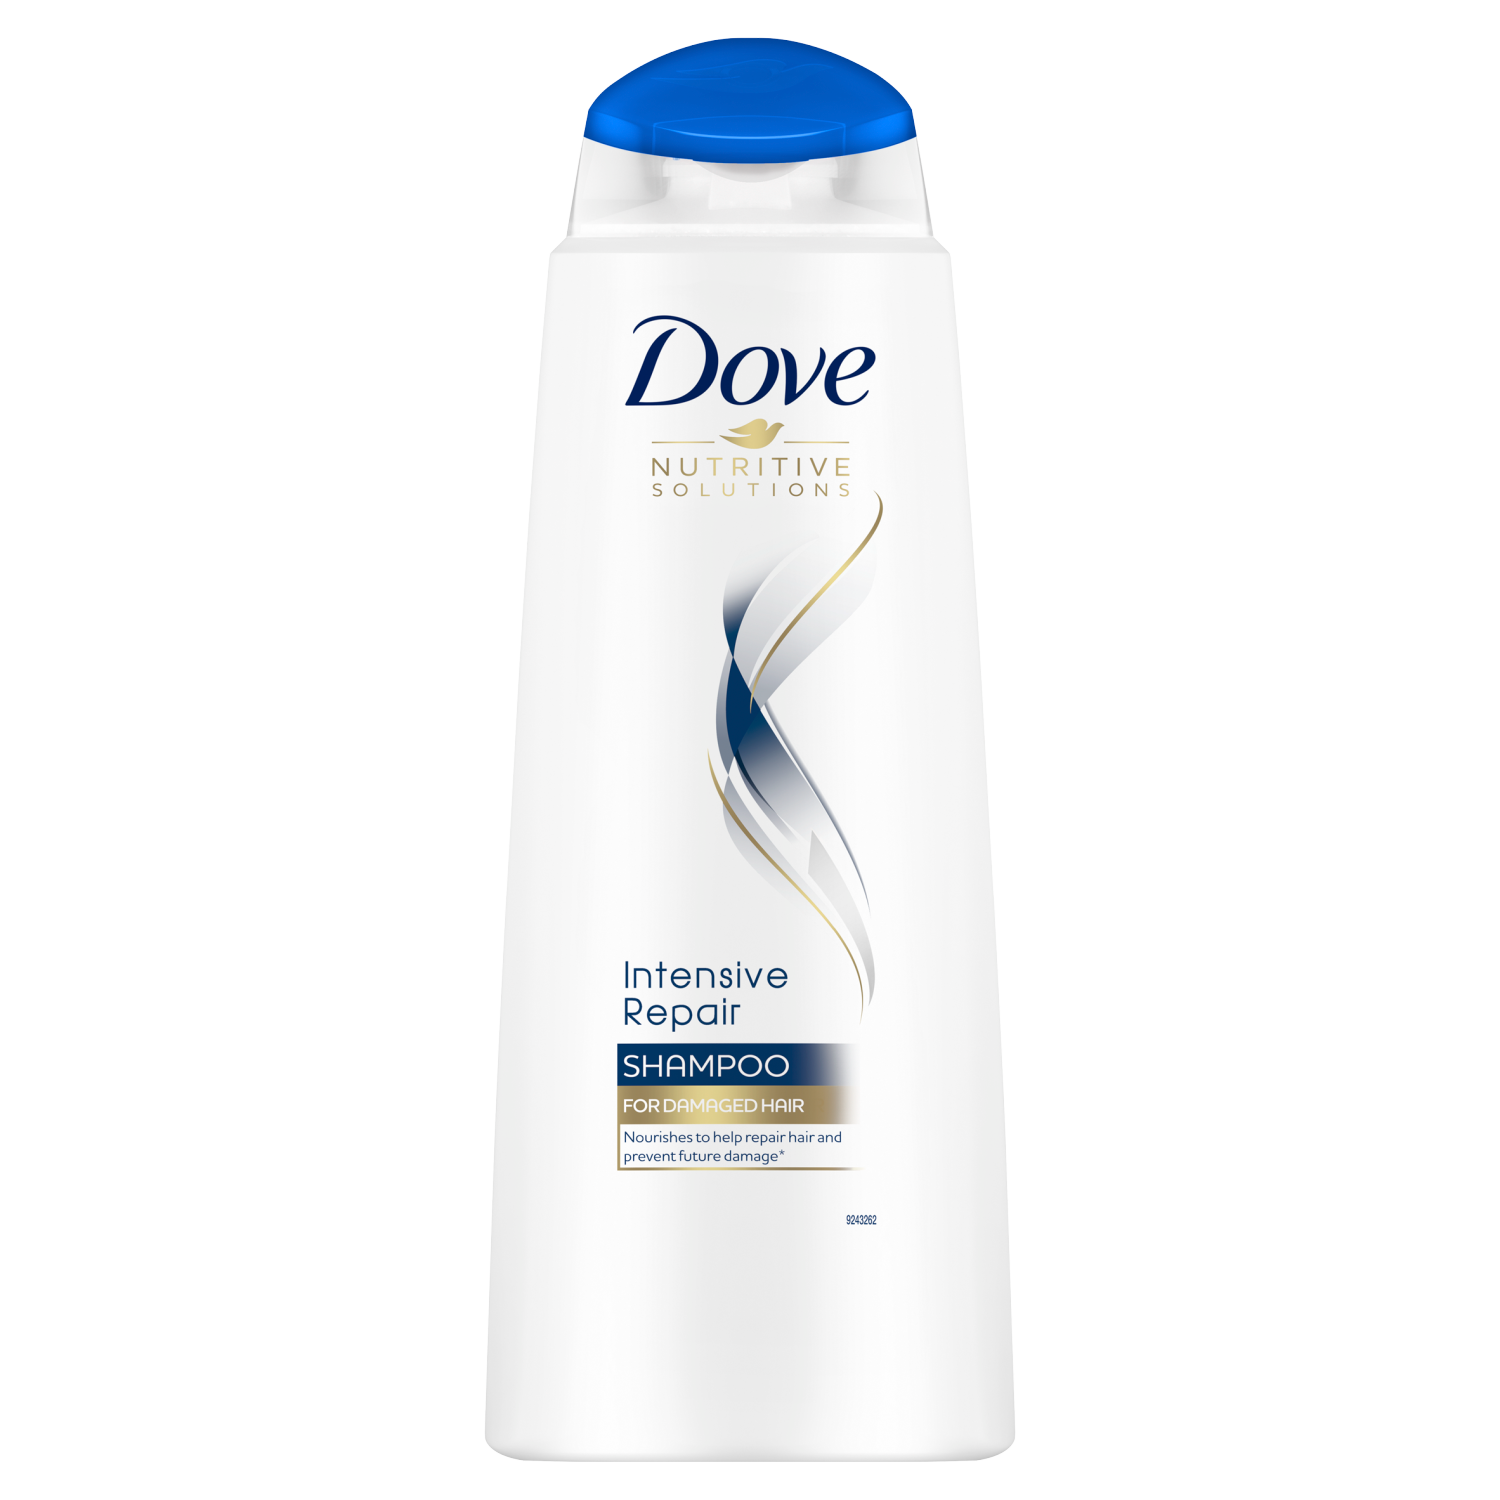 dove intensive repair шампунь 400 ml Dove Nutritive Solutions Intensive Repair шампунь для интенсивного восстановления волос, 400 мл